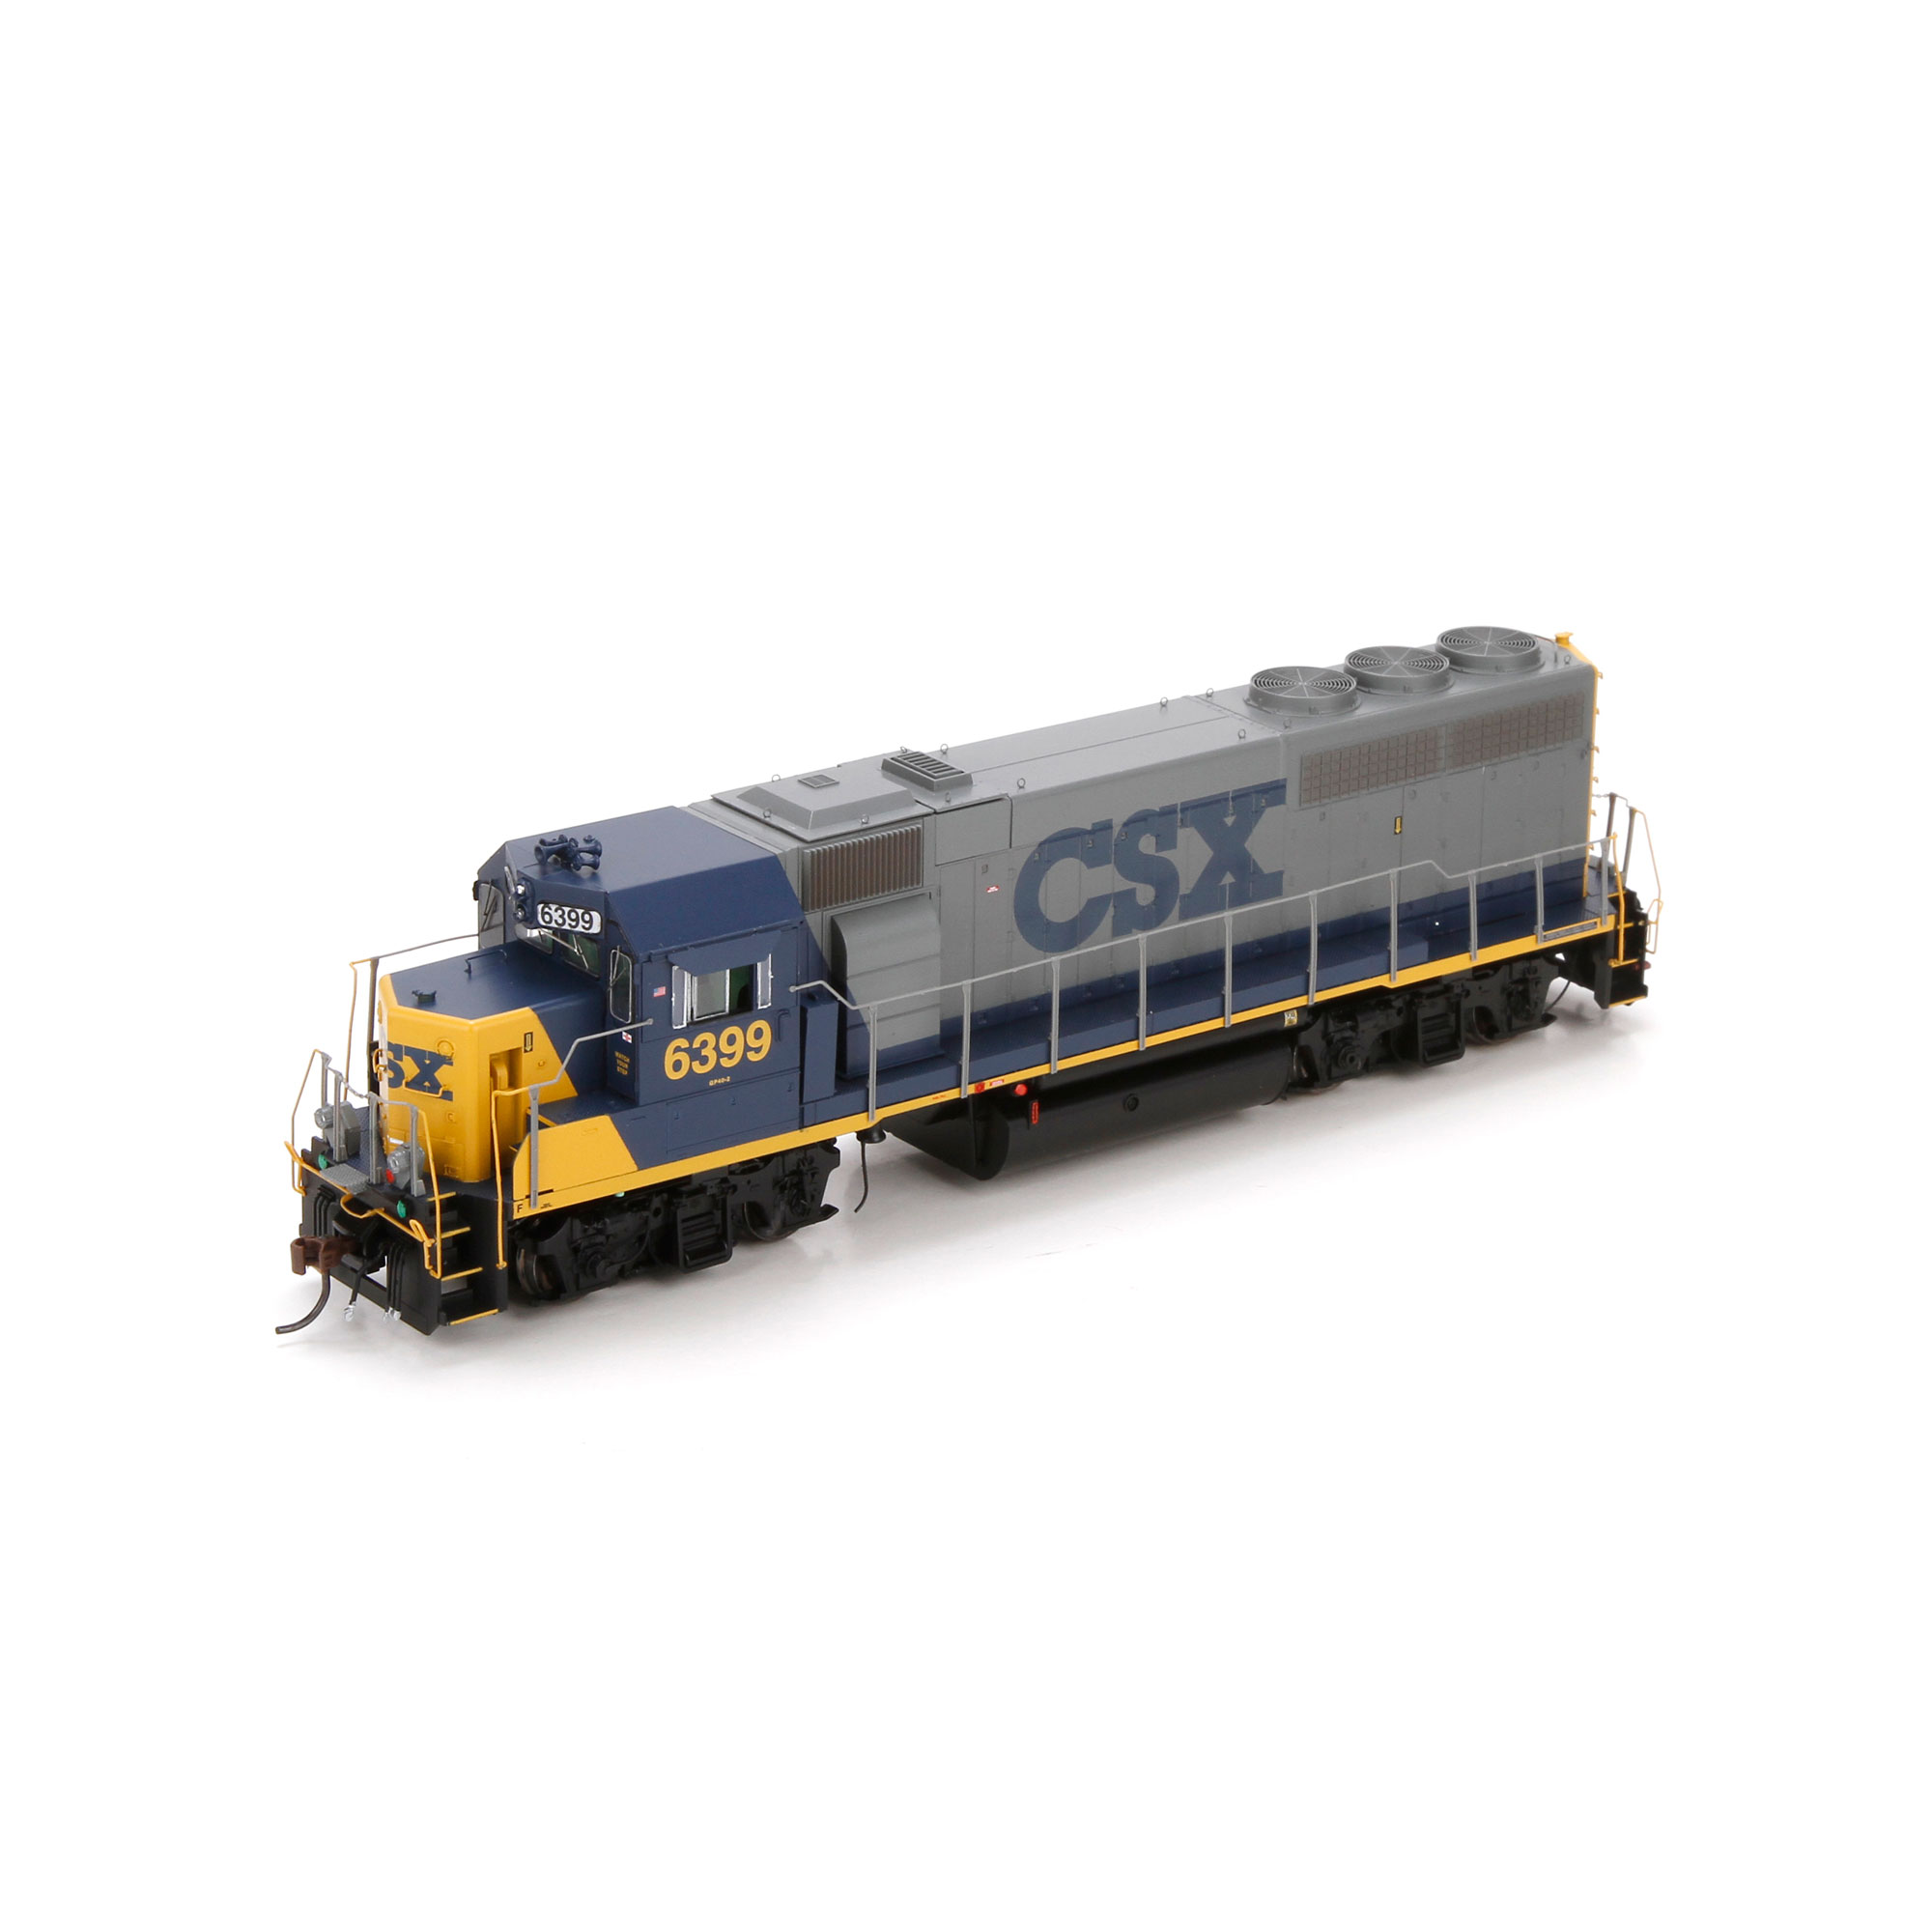 Otter Valley Railroad Model Trains - Aylmer, Ontario 